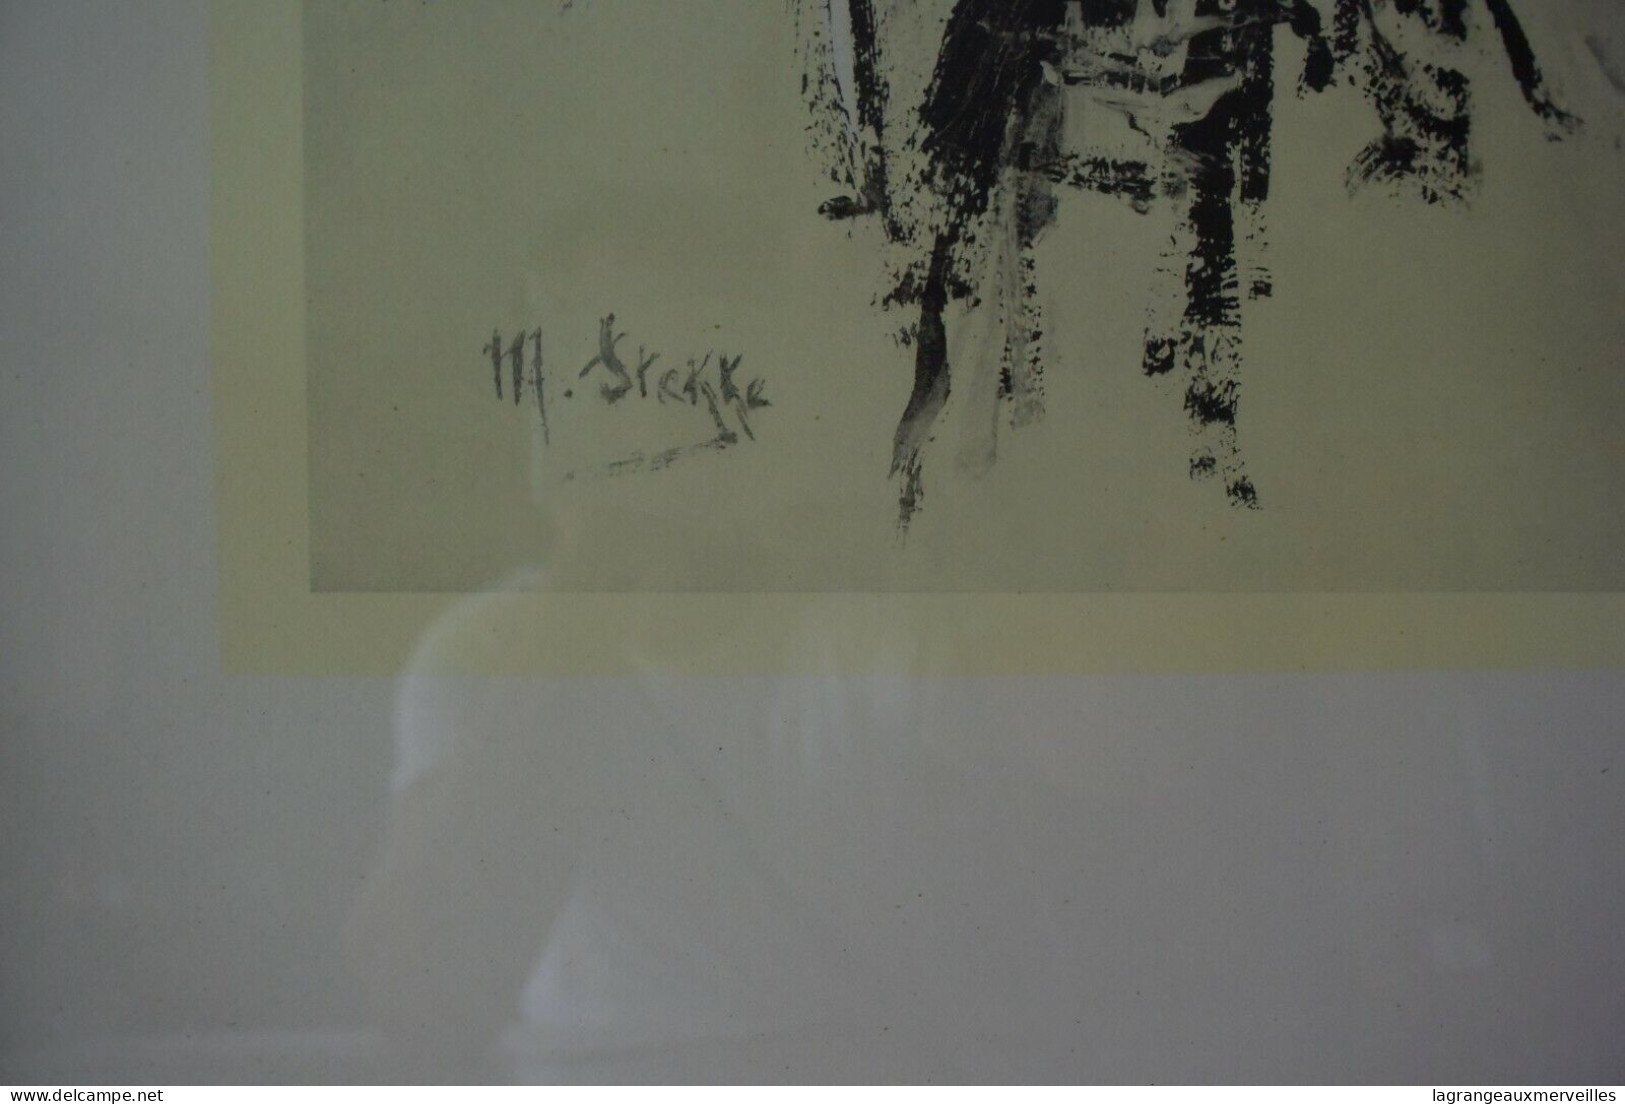 E1 Oeuvre Signée - Stekke M - Cotée - Sous Cadre - Zeichnungen